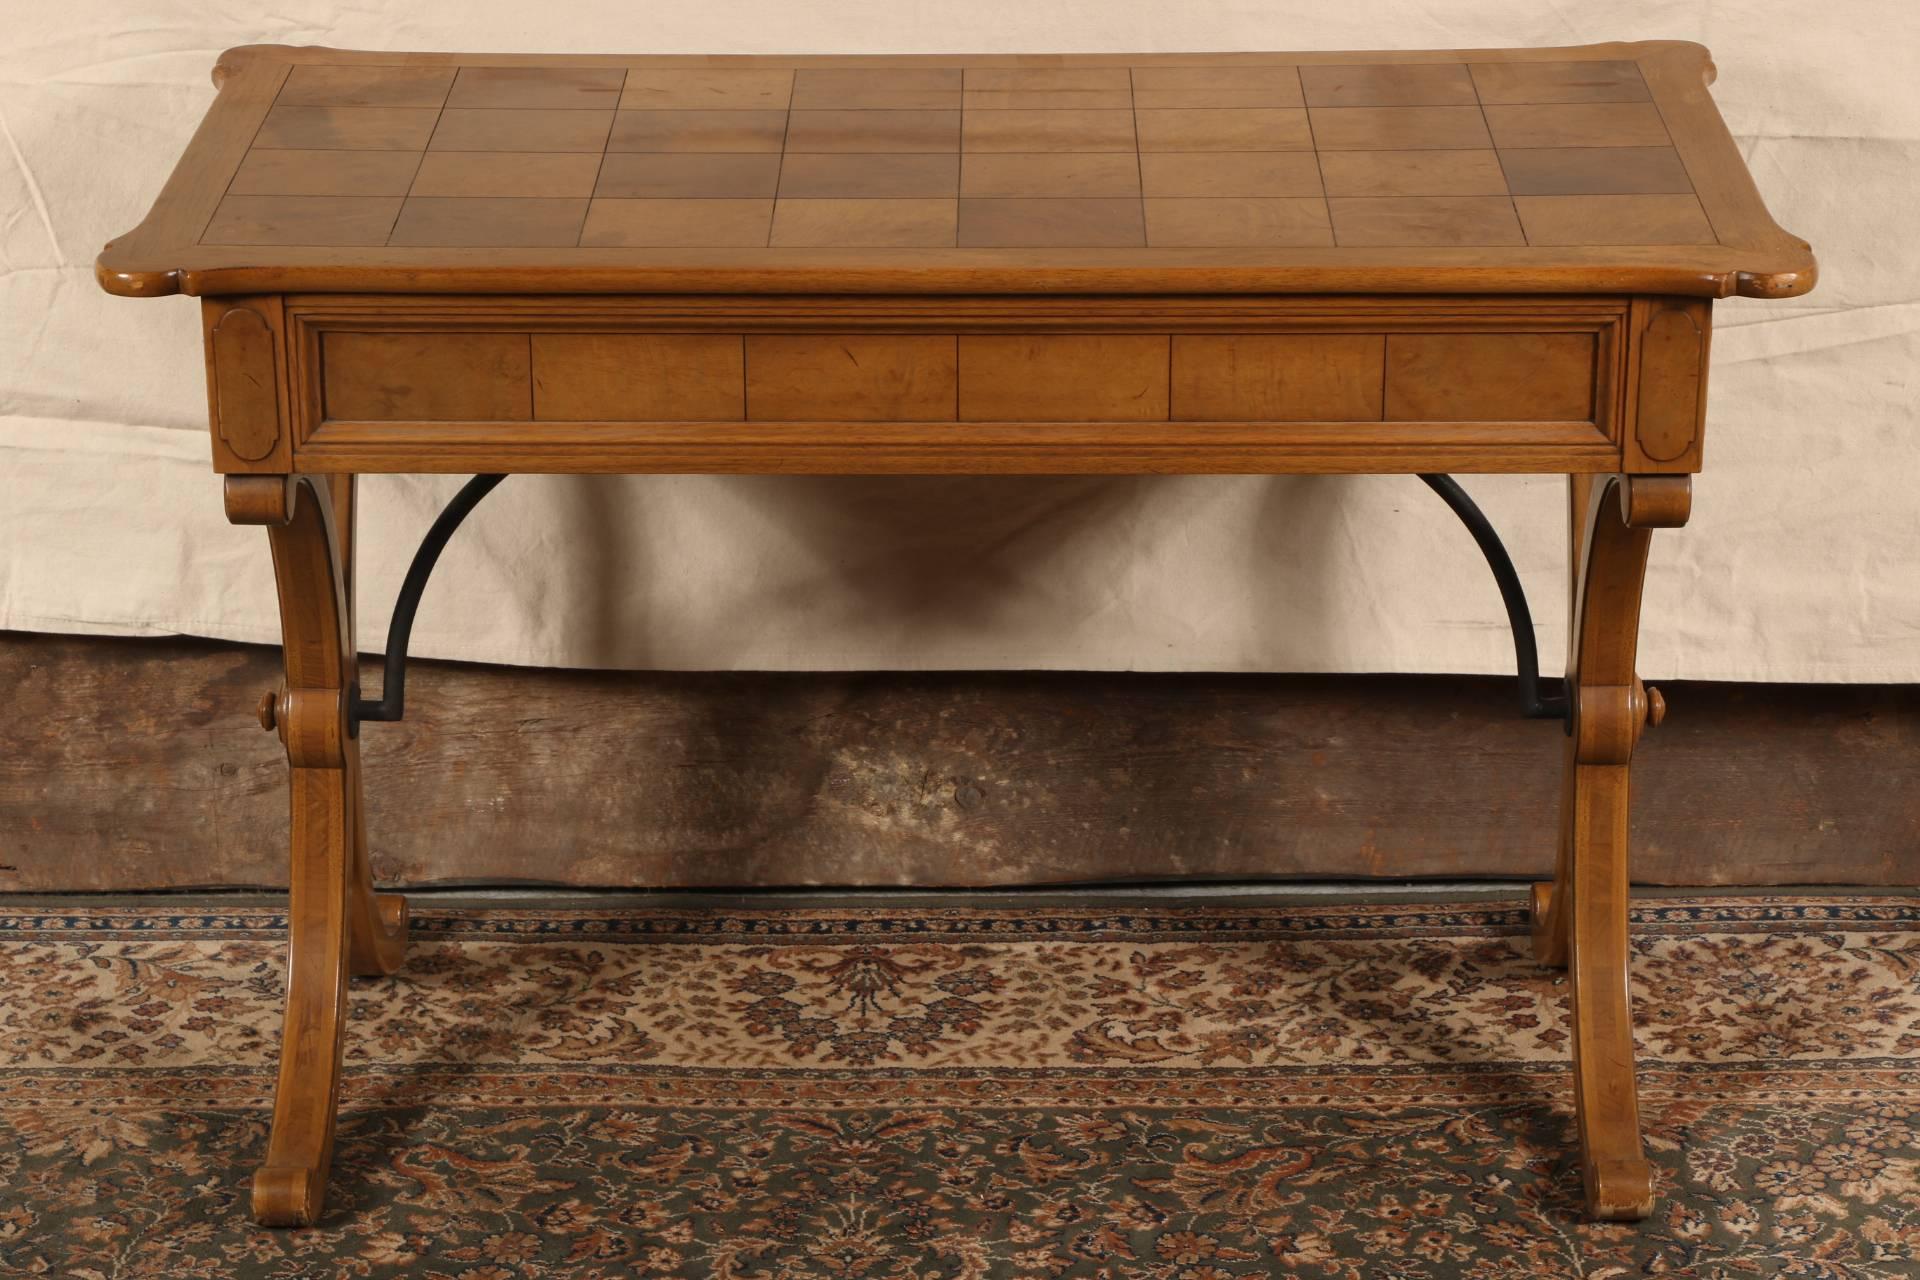 20th Century Tomlinson Italian Style Desk with Parquetry Burled Veneer Top